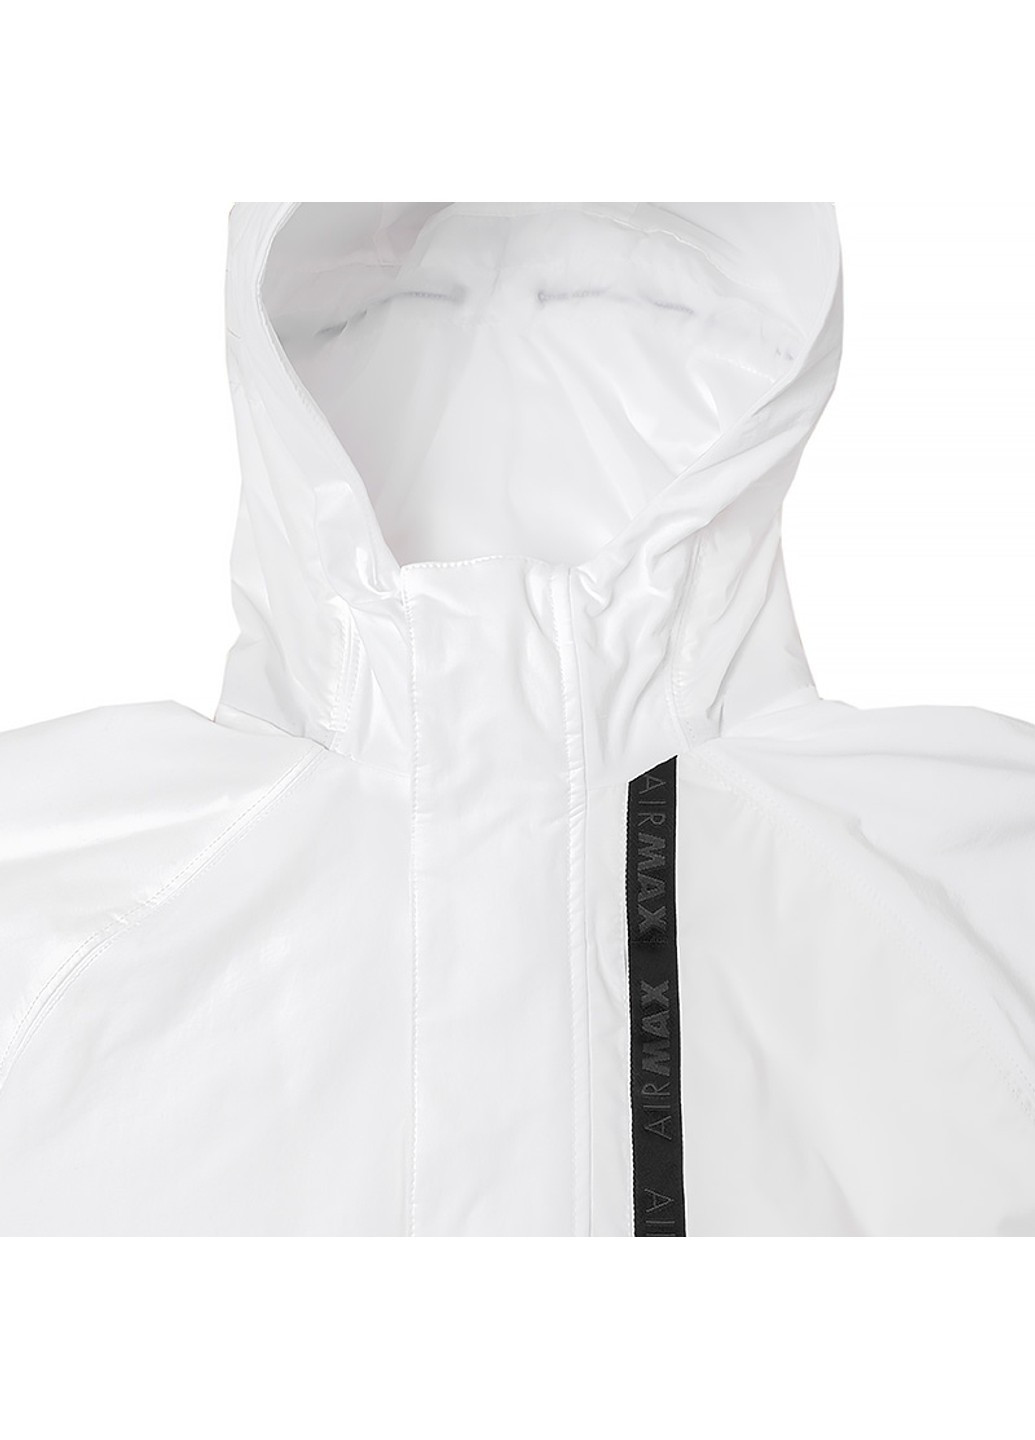 Біла демісезонна куртка m nsw air max wvn jacket Nike